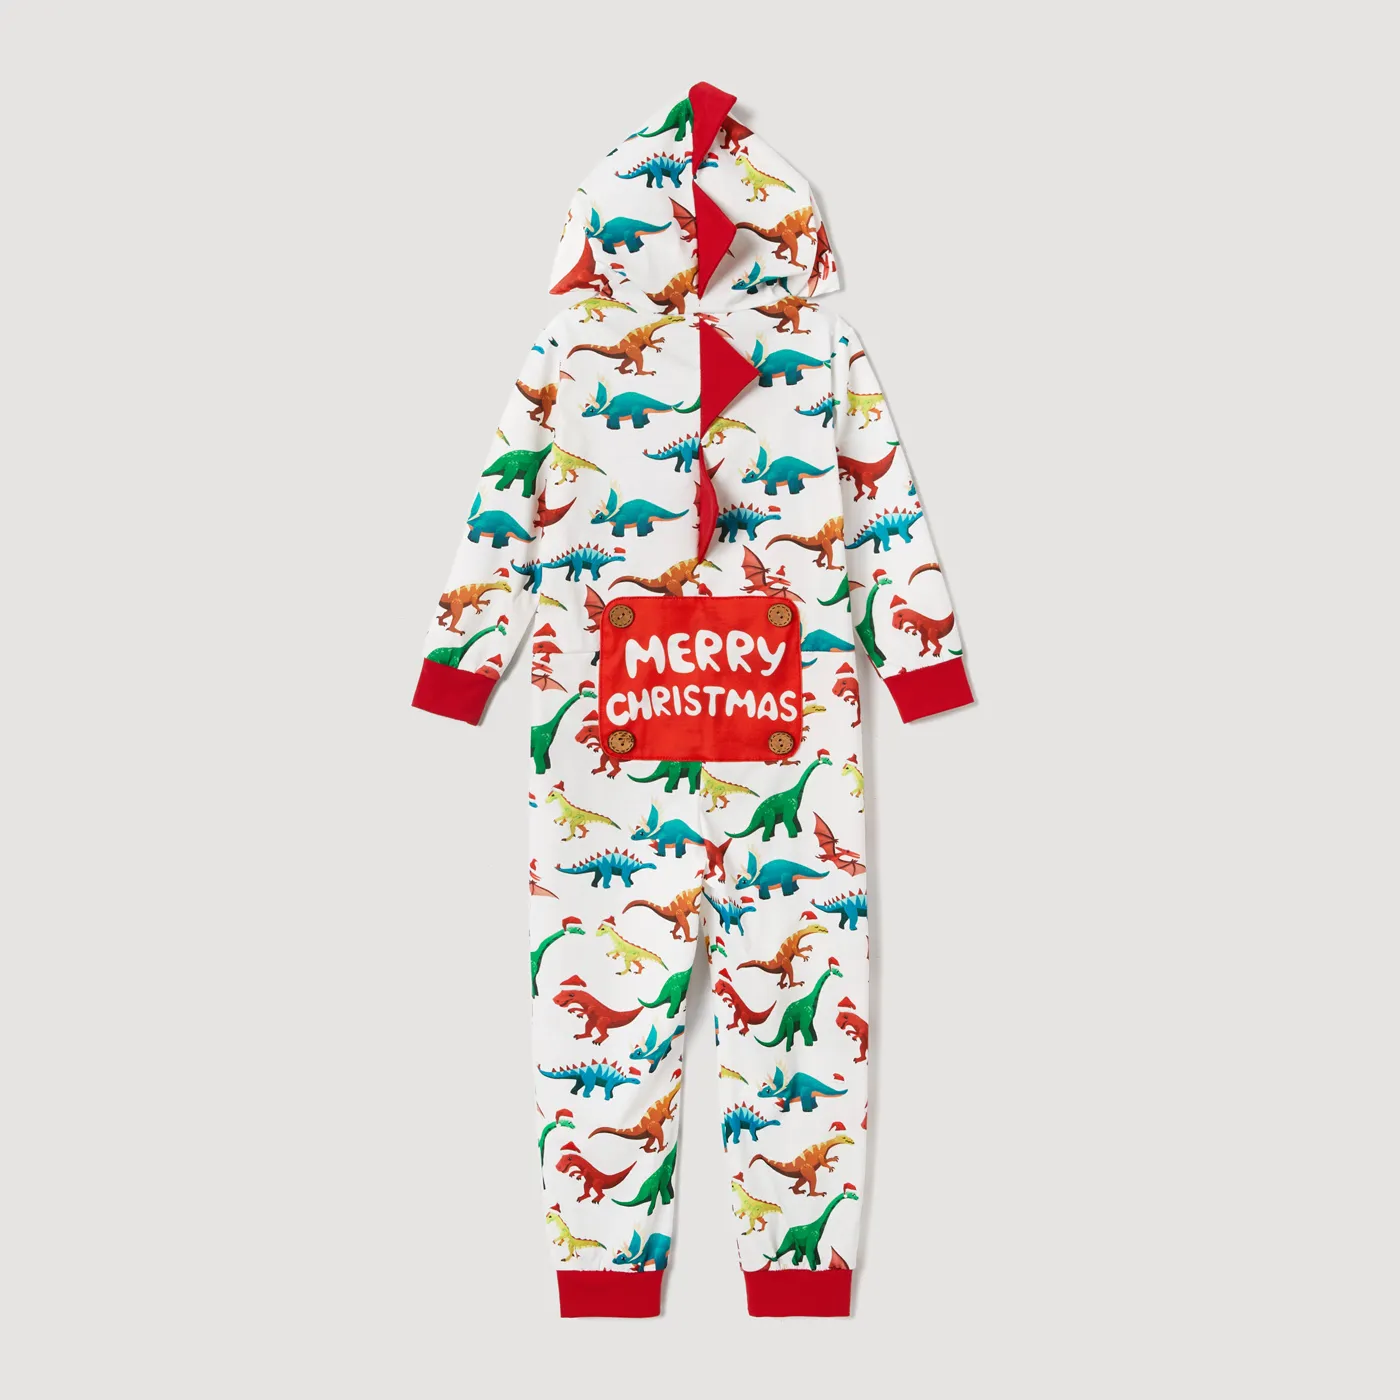 Christmas Dinosaur Print Family Matching Long-sleeve Hooded Onesies Pajamas Sets (Flame Resistant)